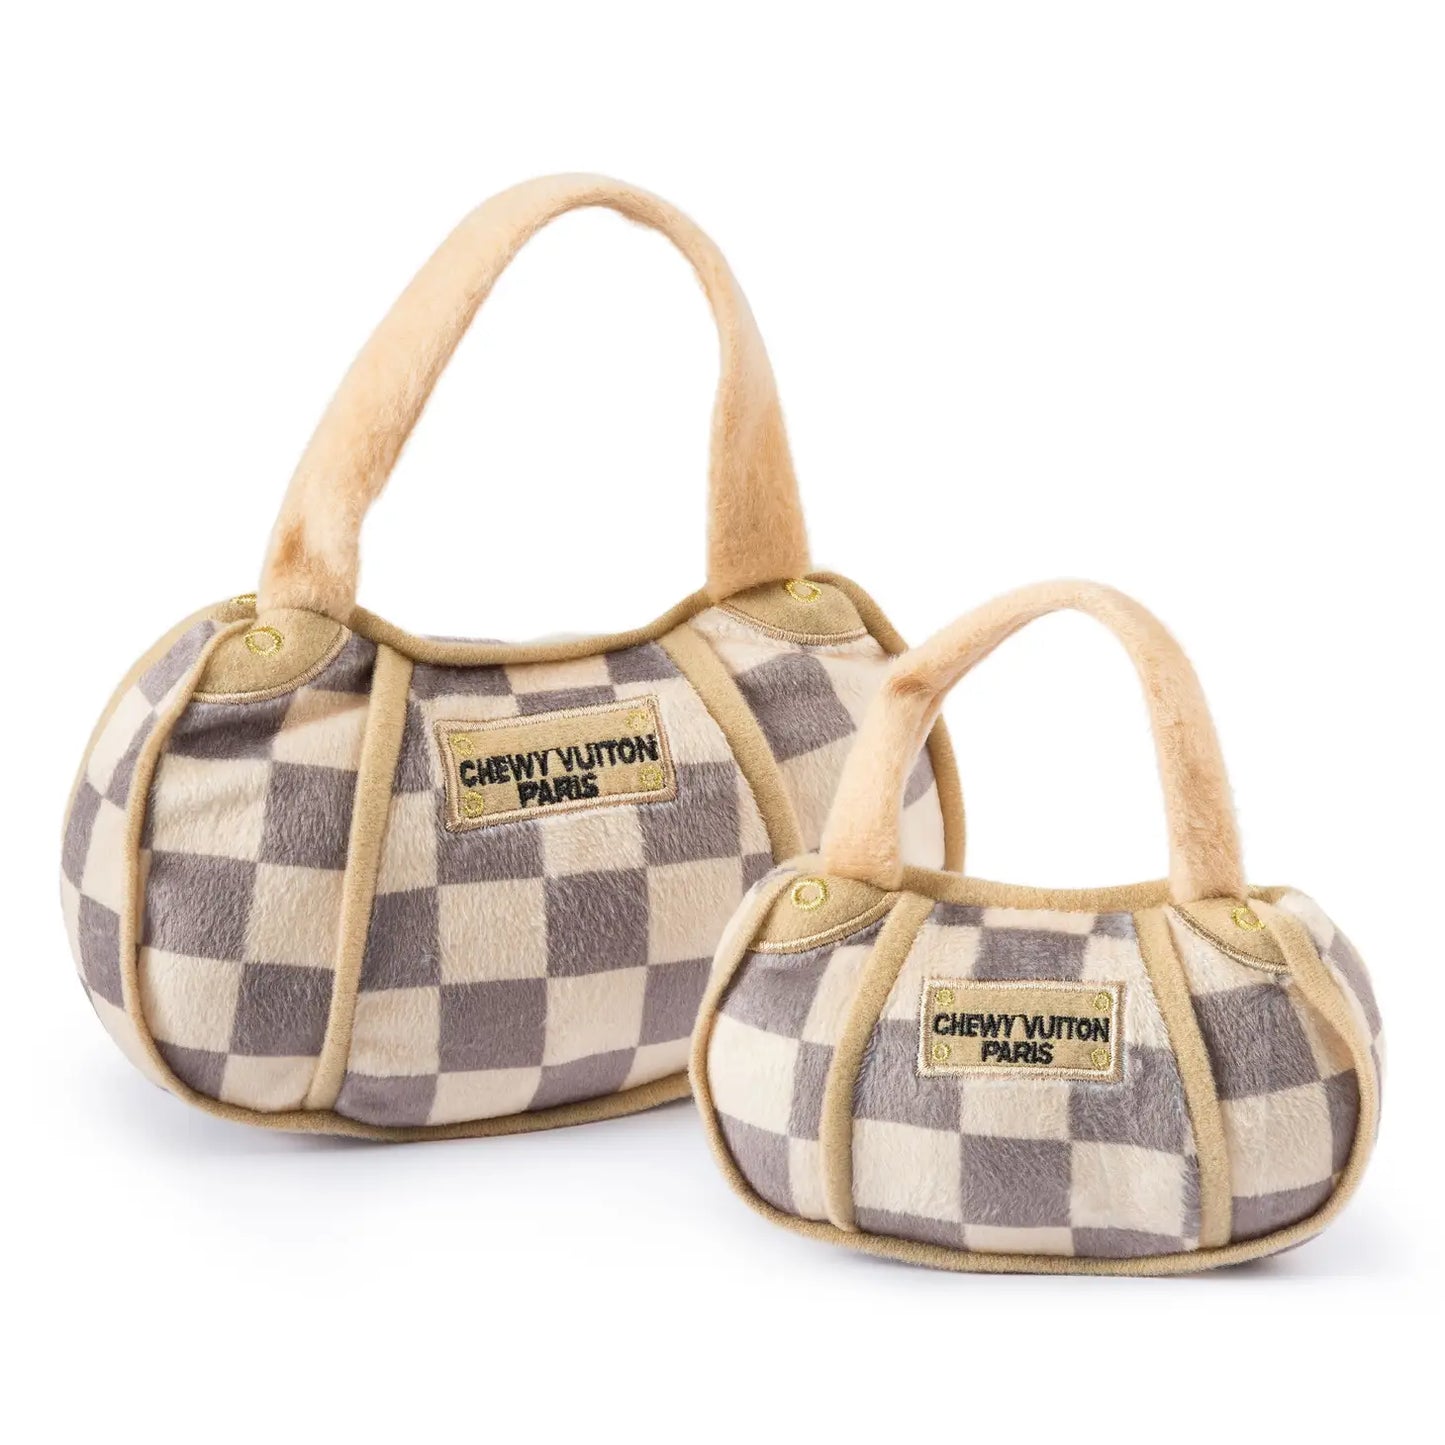 Checker Chewy Vuiton Handbag Squeaker Dog Toy